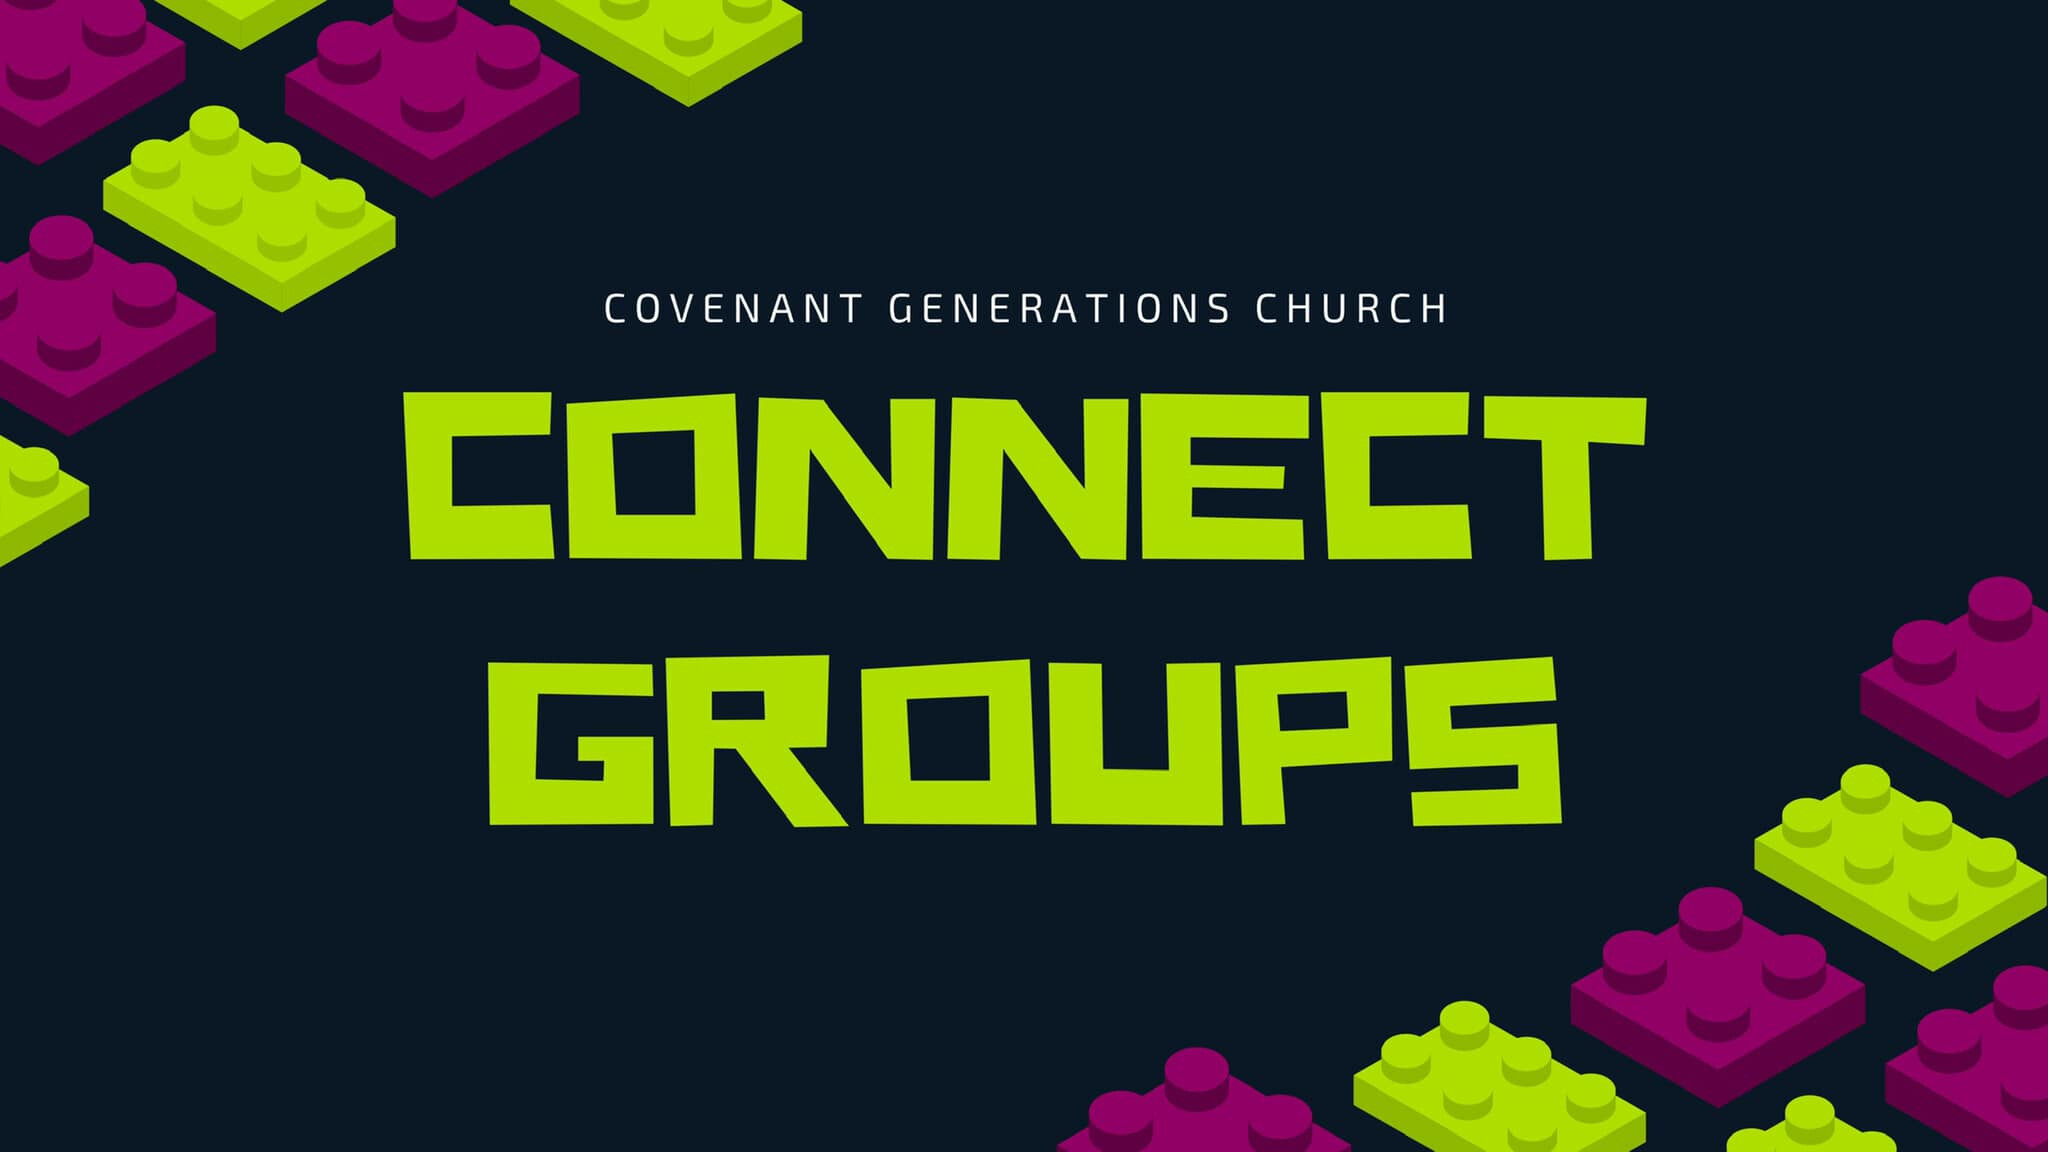 CGC LIVE STREAM  Covenant Generations Church